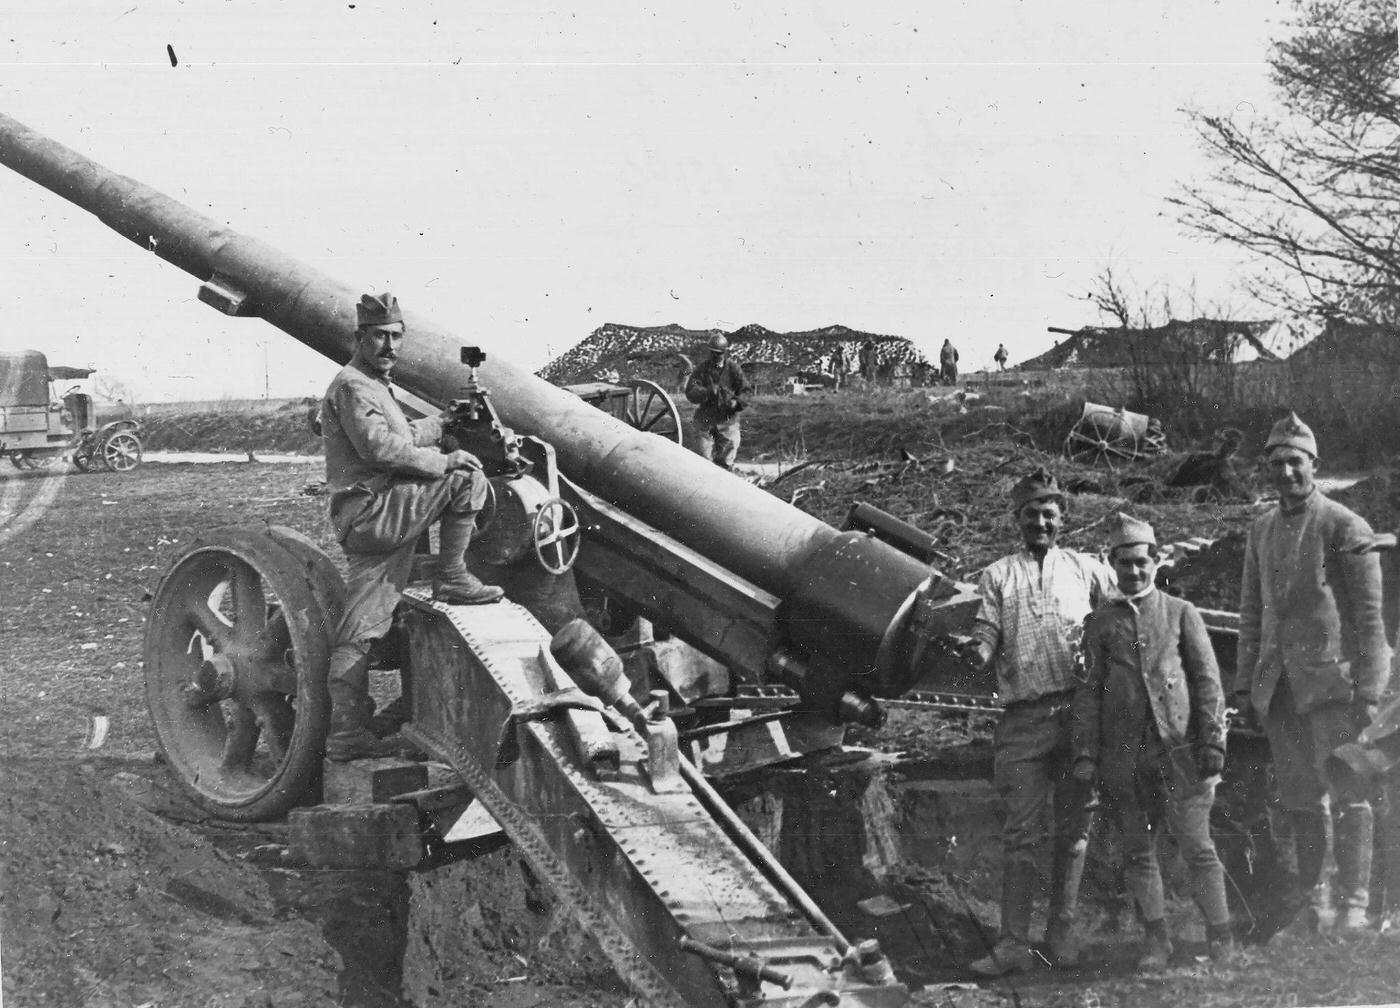 320 mm railway gun, Split trail gun, 1918, France.